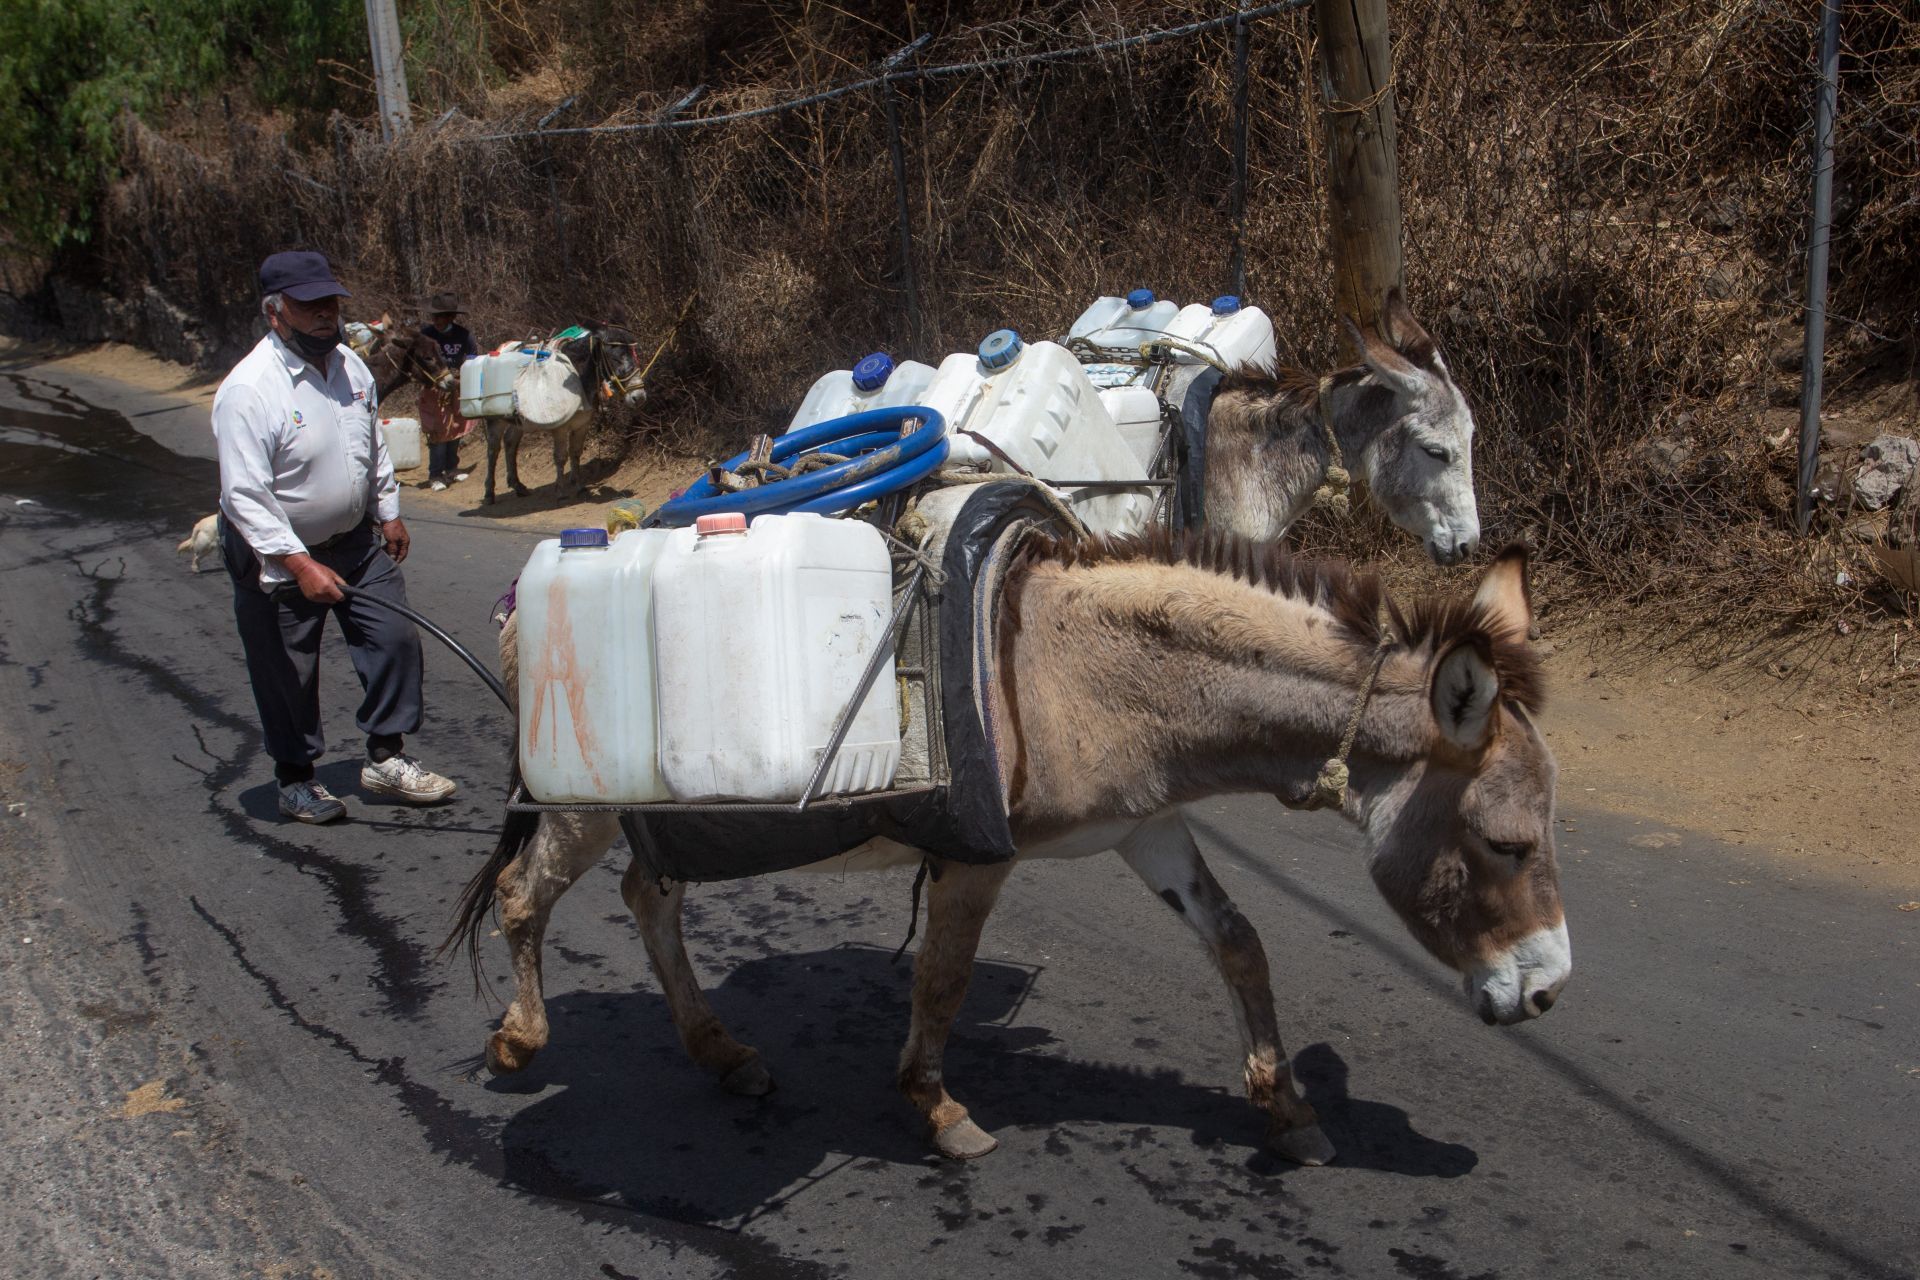 Alcalde panista regala burros a niños para ir a la escuela en Guanajuato  - Página 4 DARGWIM46FGDJMEZCC666RVGFE